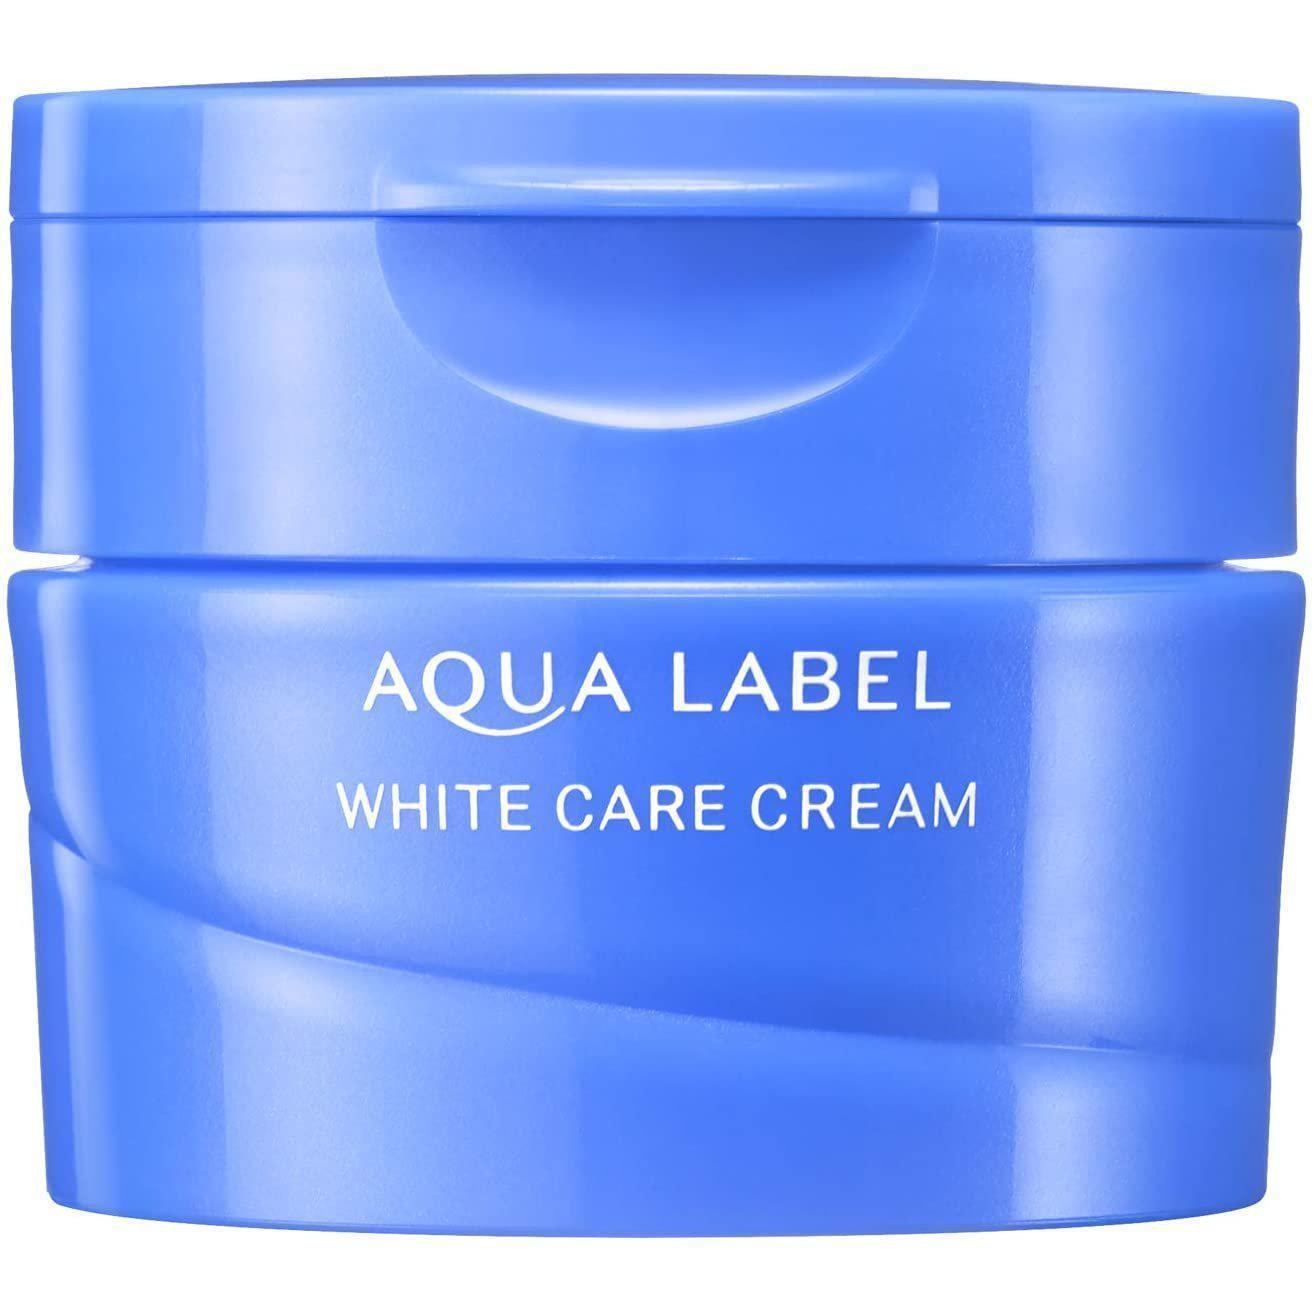 P-1-AQUA-WHTFCR-50-Shiseido Aqualabel Brightening White Care Cream 50g.jpg